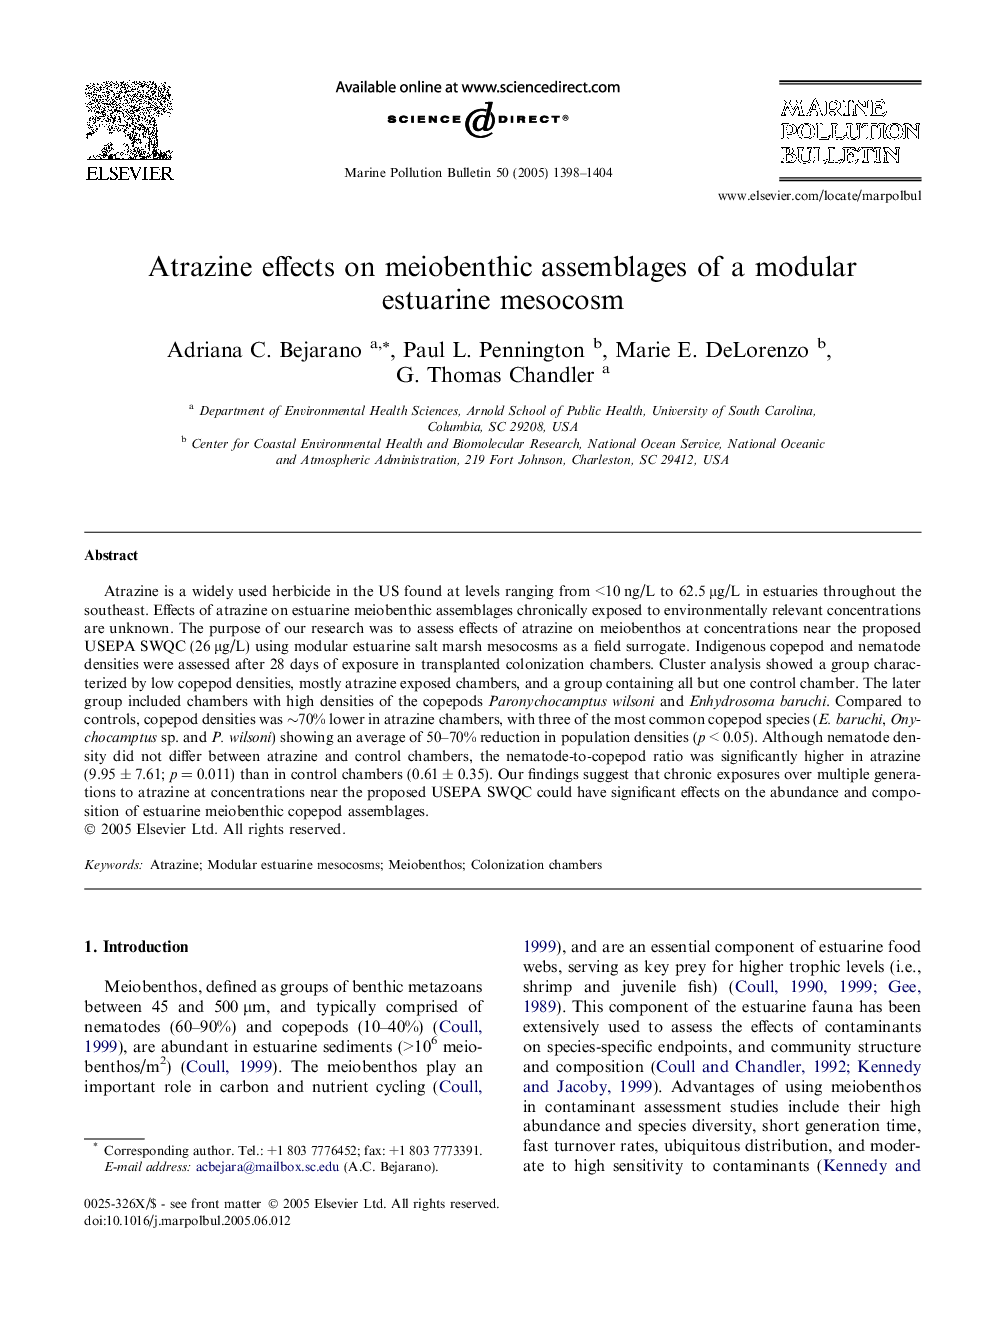 Atrazine effects on meiobenthic assemblages of a modular estuarine mesocosm